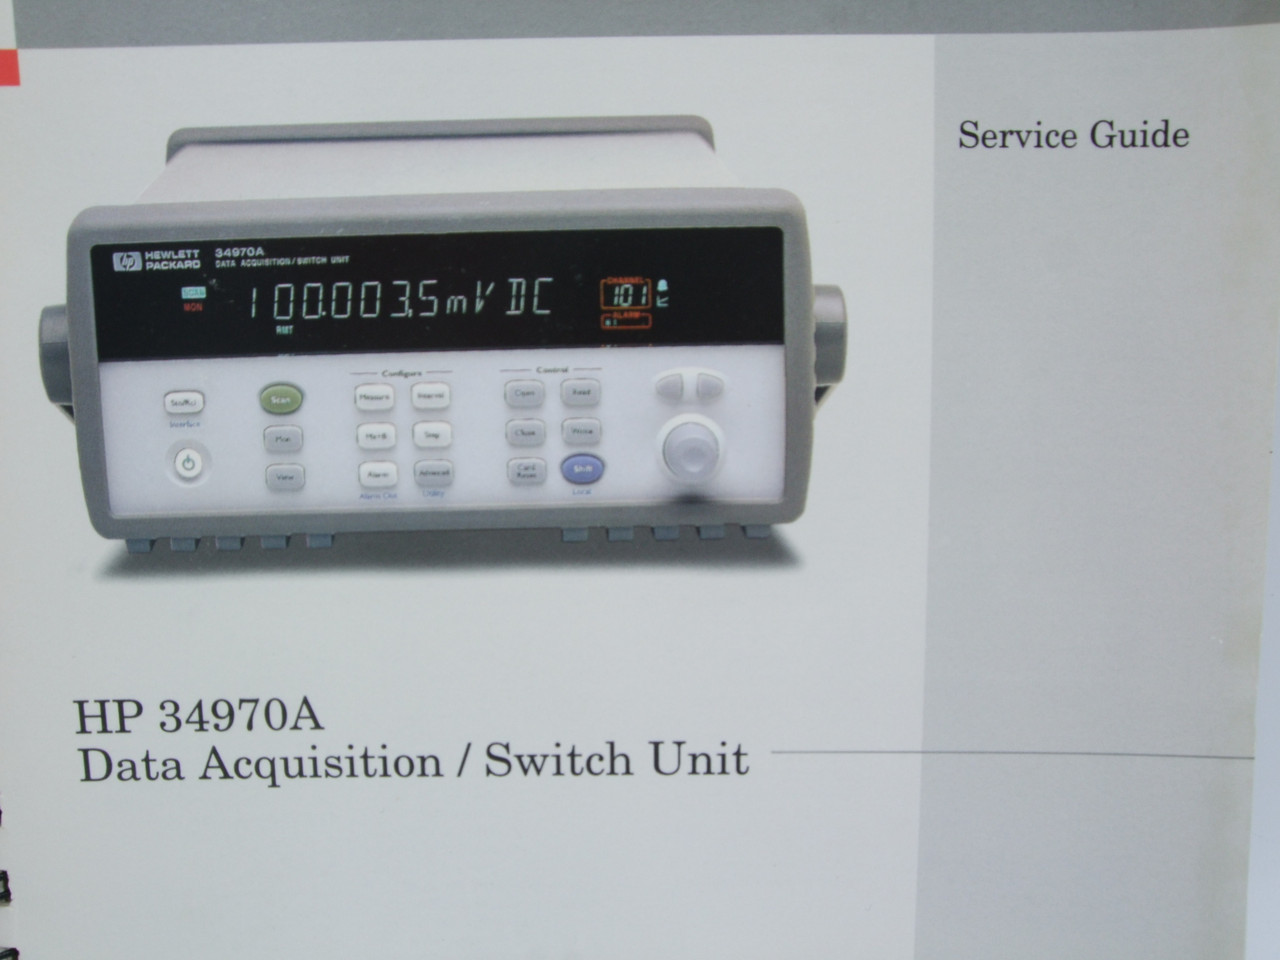 HP 34970A Data Acquisition/Switch Unit Service Guide